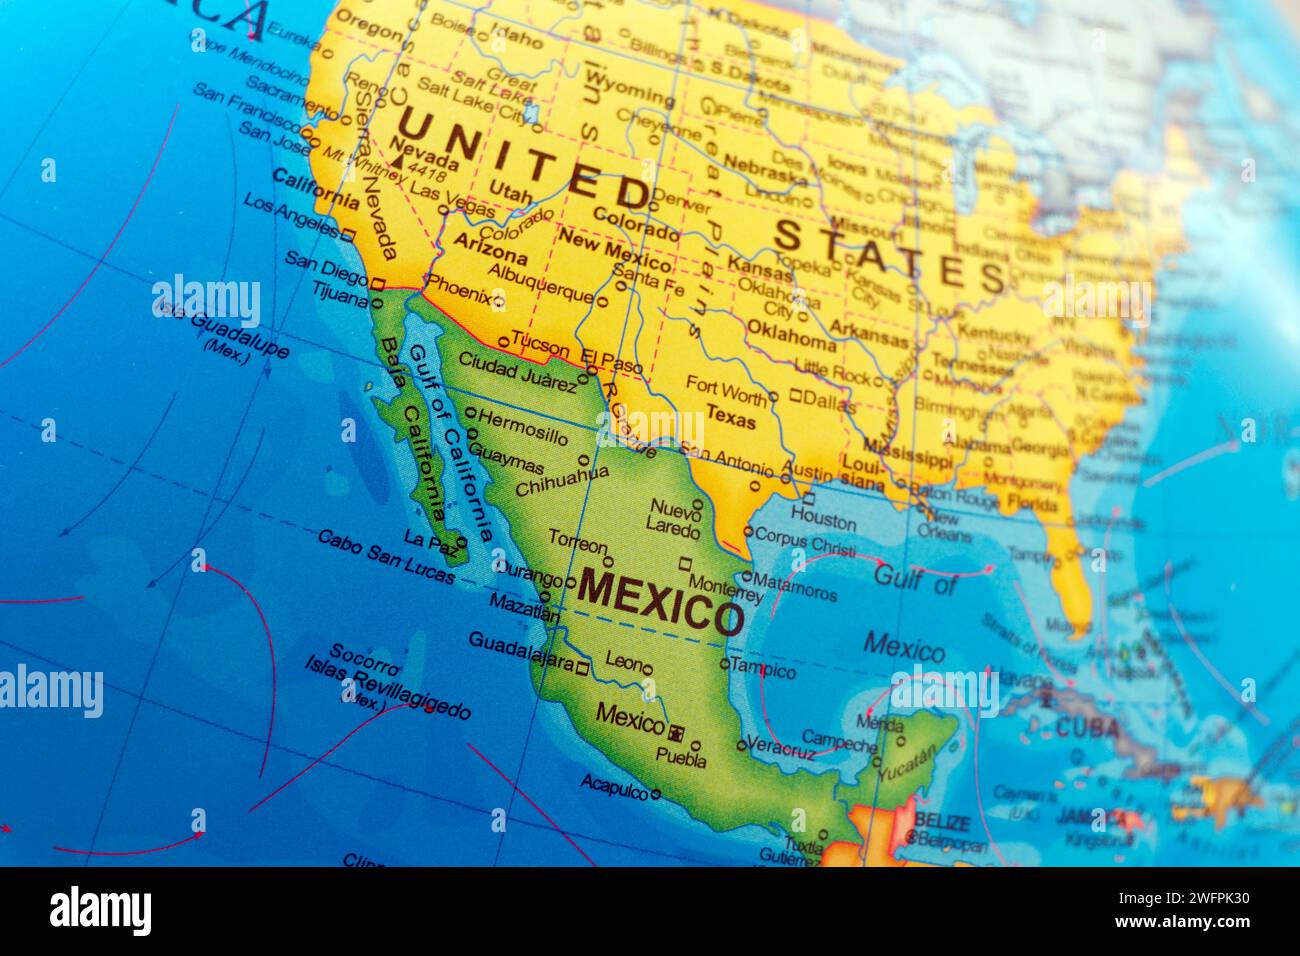 united states of america and mexico map or atlas border with virginia, alabama, new york, washington, carolina, florida, georgia and orlando in close Stock Photo